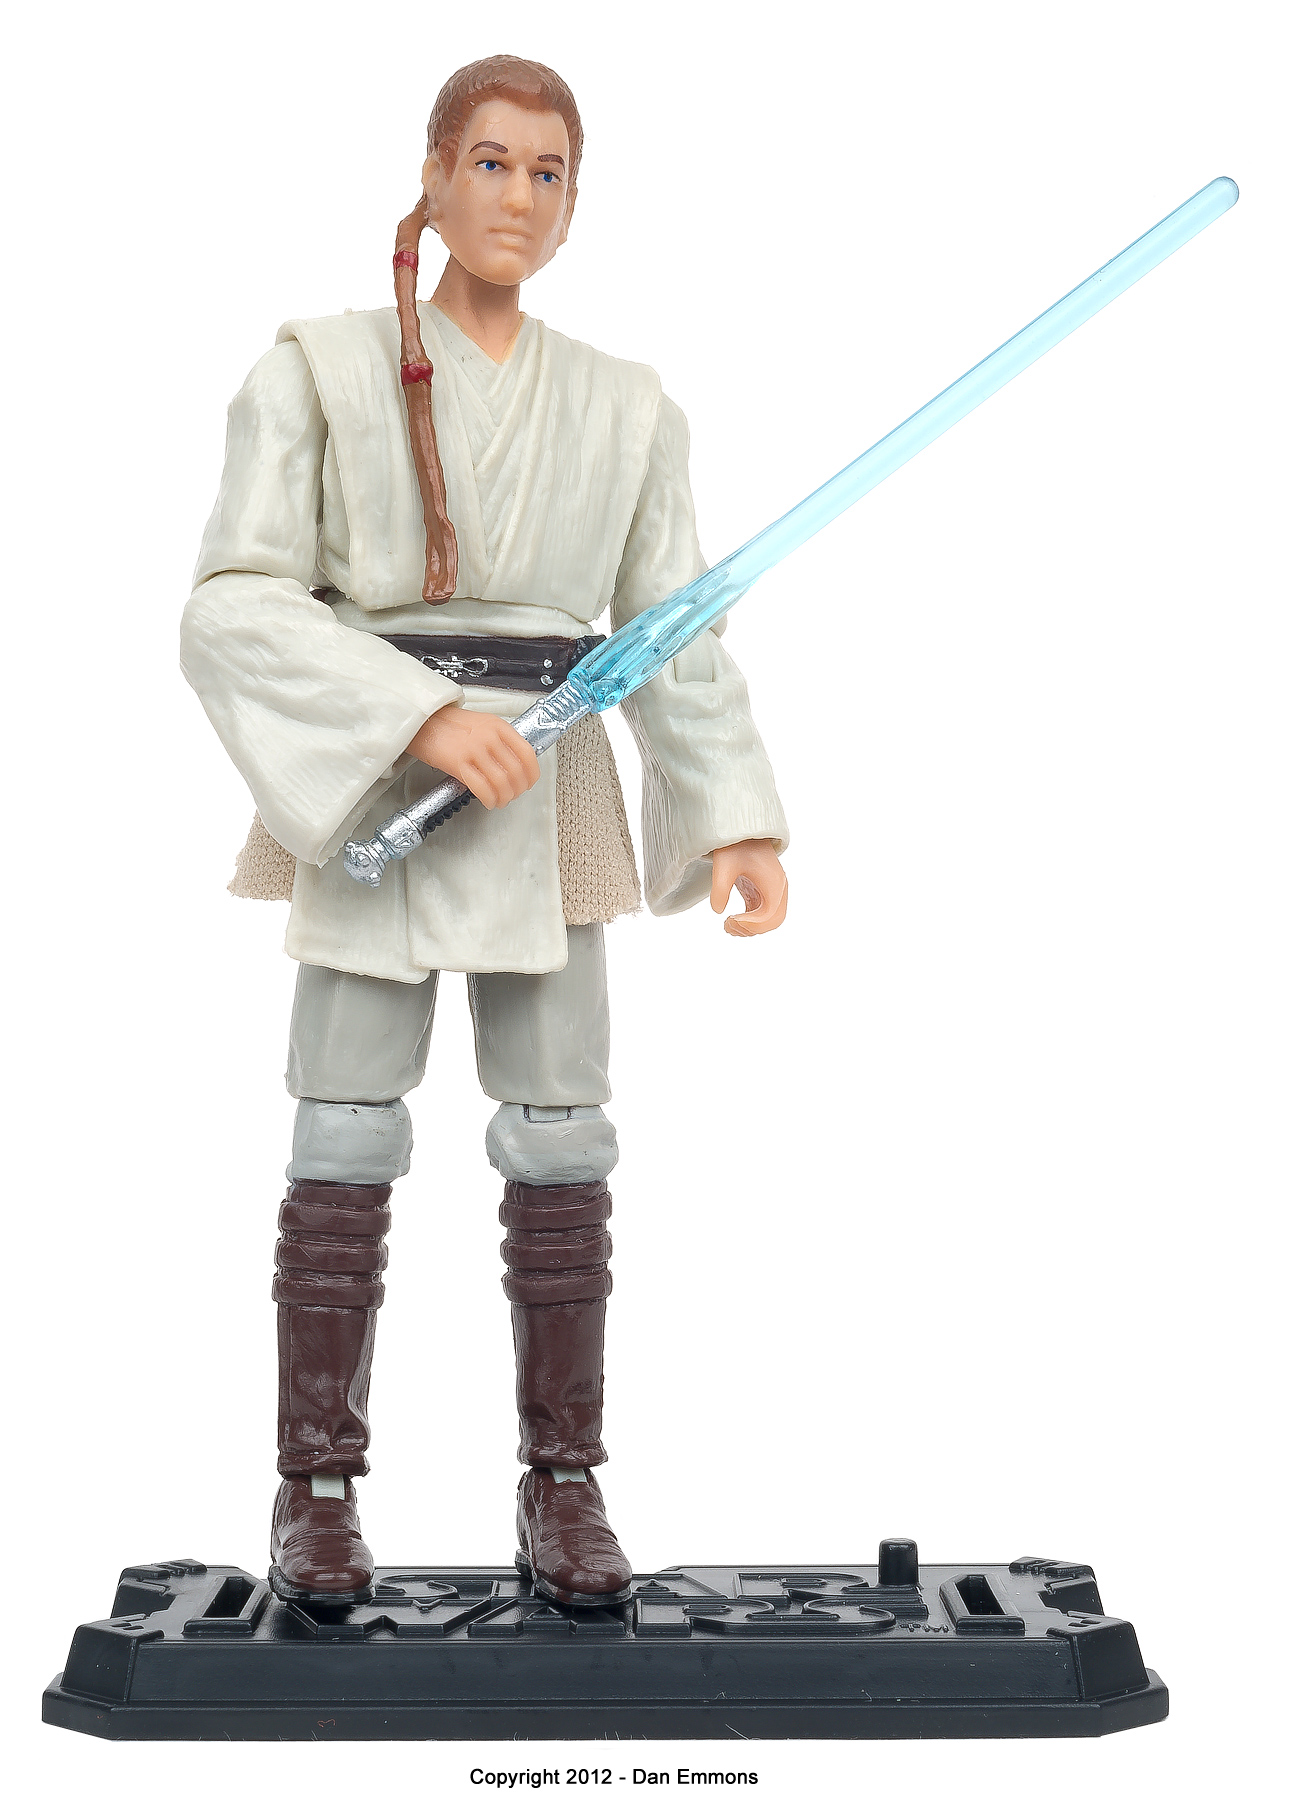 Discover The Force – 7: Obi-Wan Kenobi